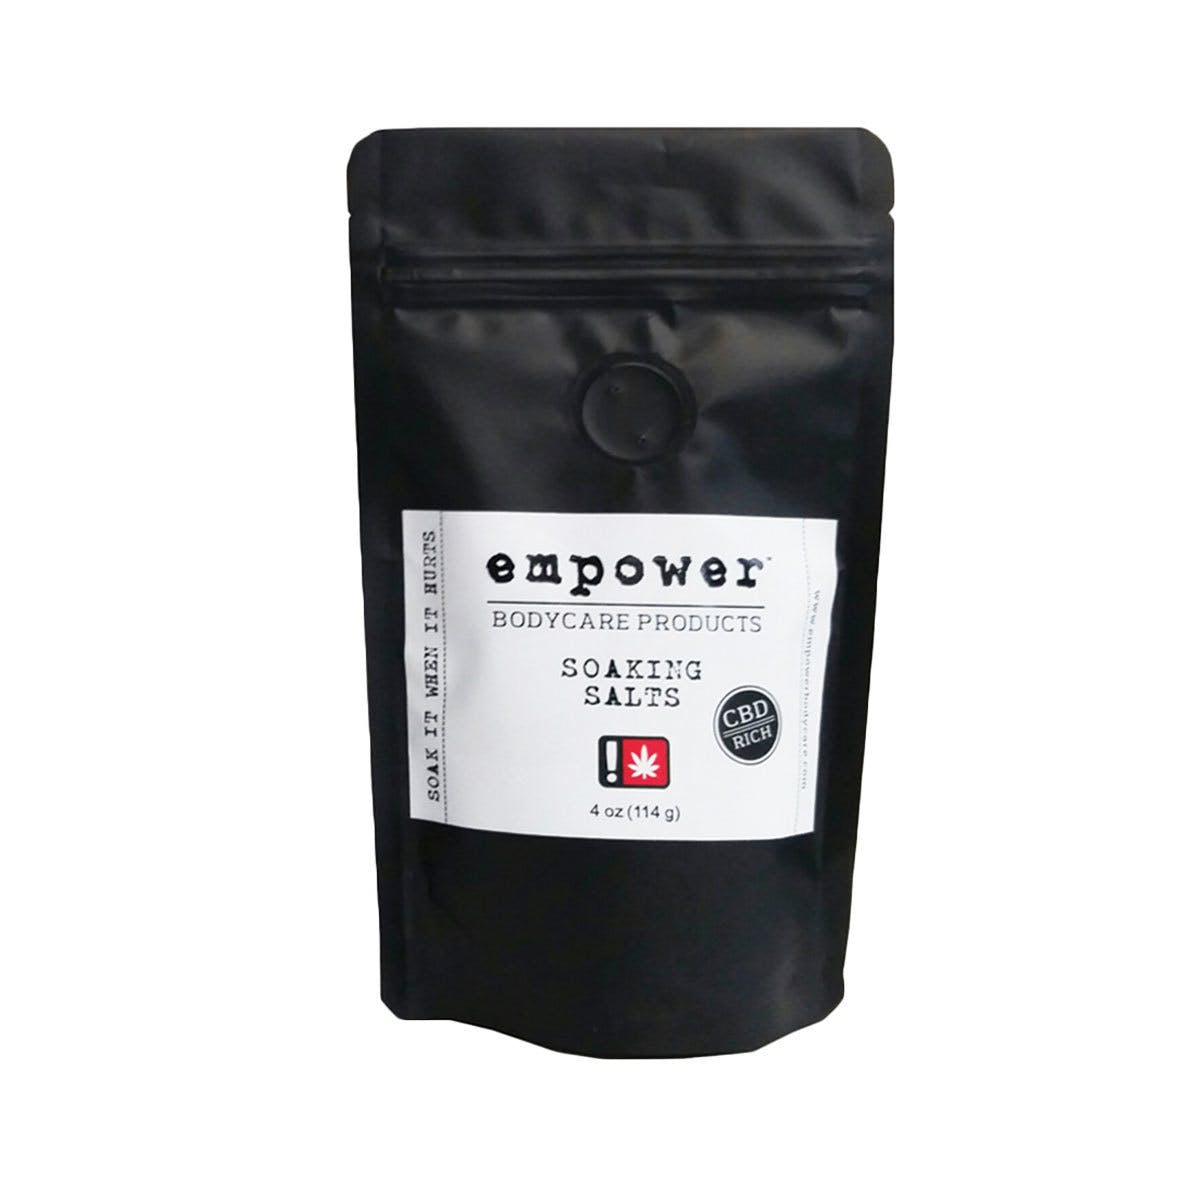 Empower® Soaking Salts - White Label 4oz